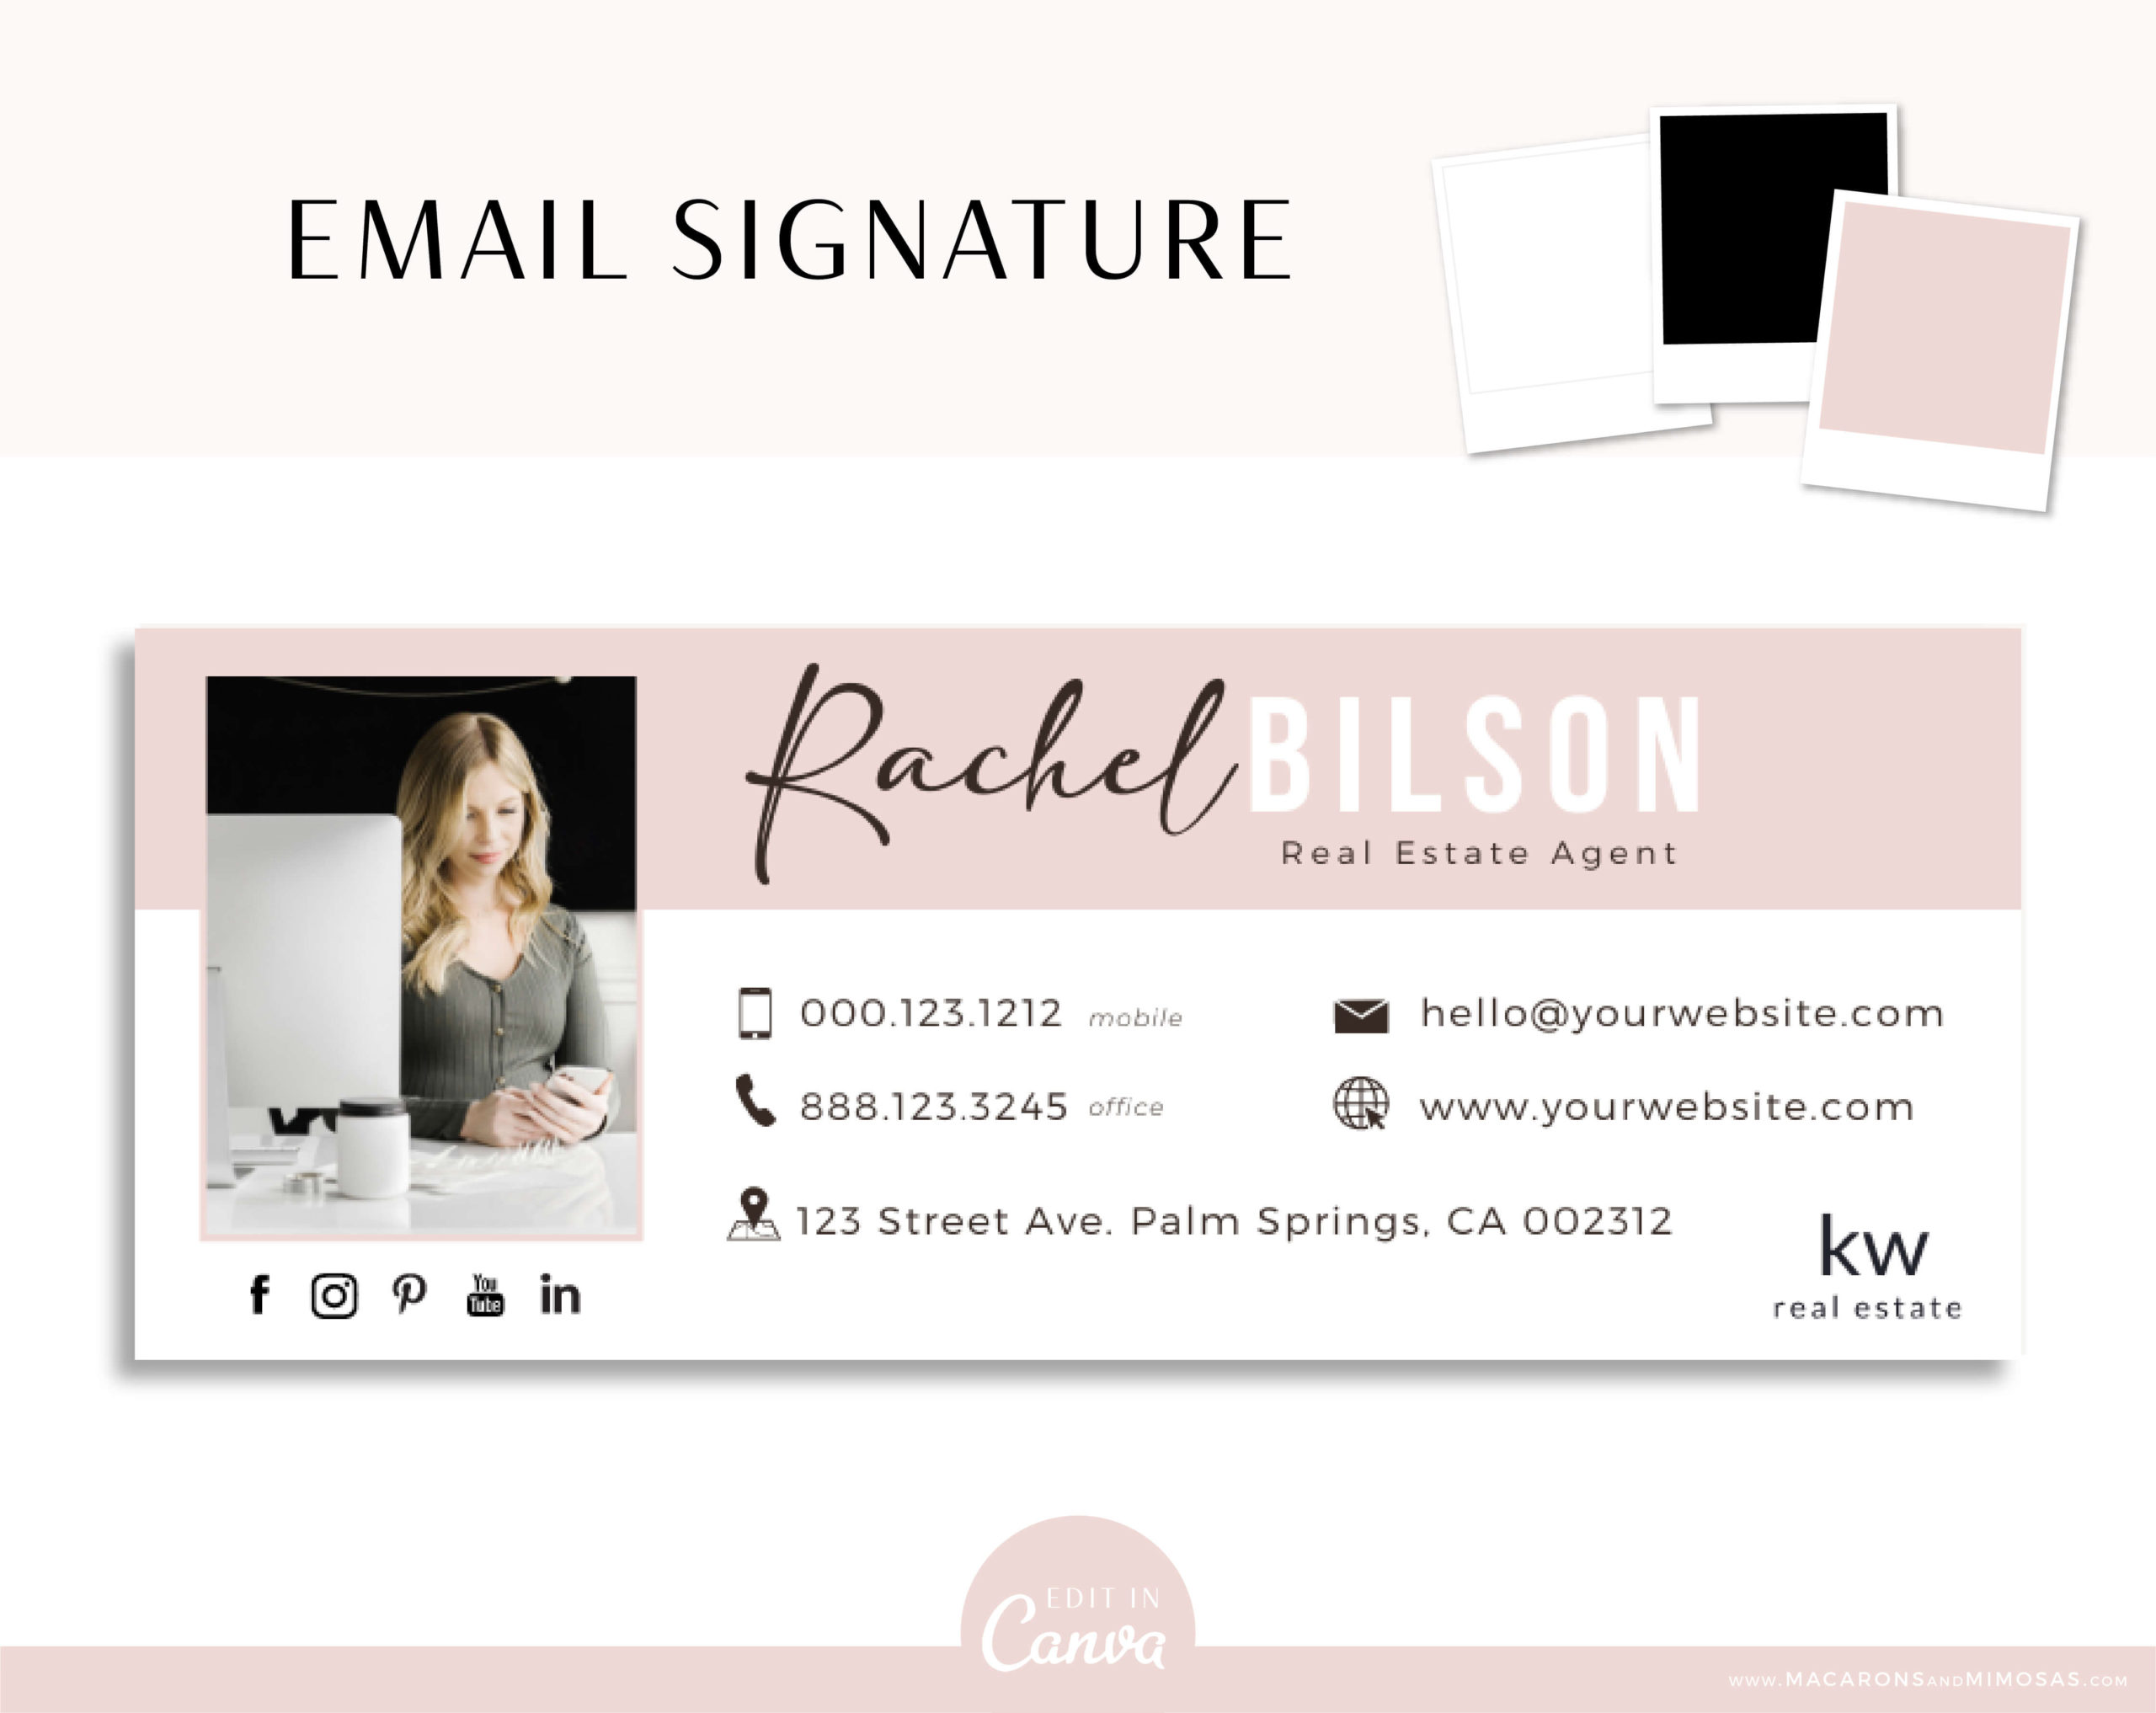 Professional Email Signature Template, Edit Image Email Signature, Realtor Real Estate Broker Email Signature, Elegant Email Signature